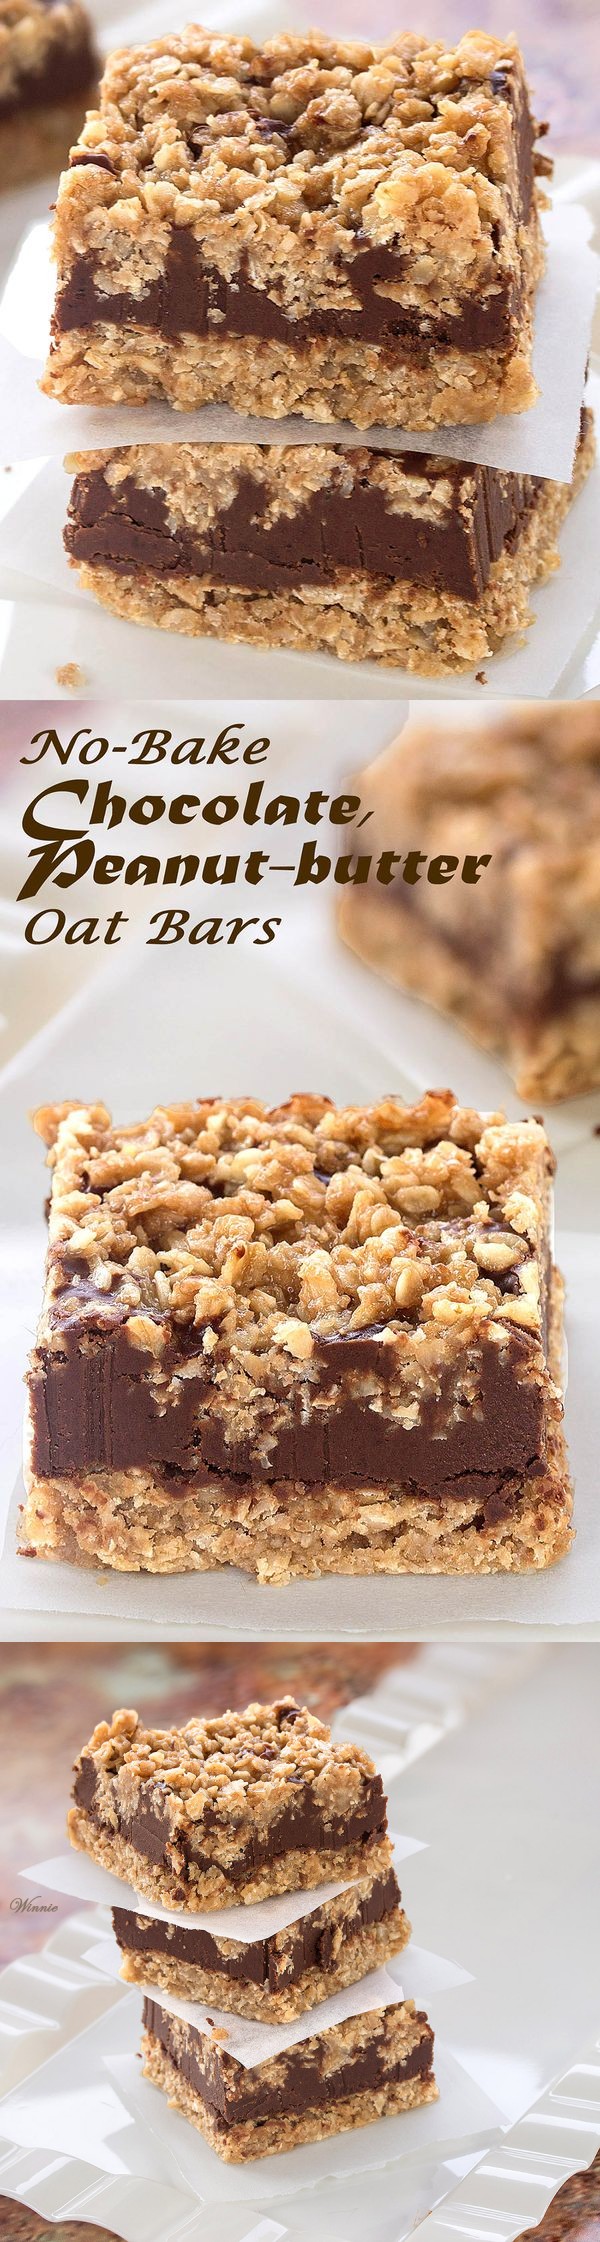 No-Bake Chocolate, Peanut-butter Oat Bars